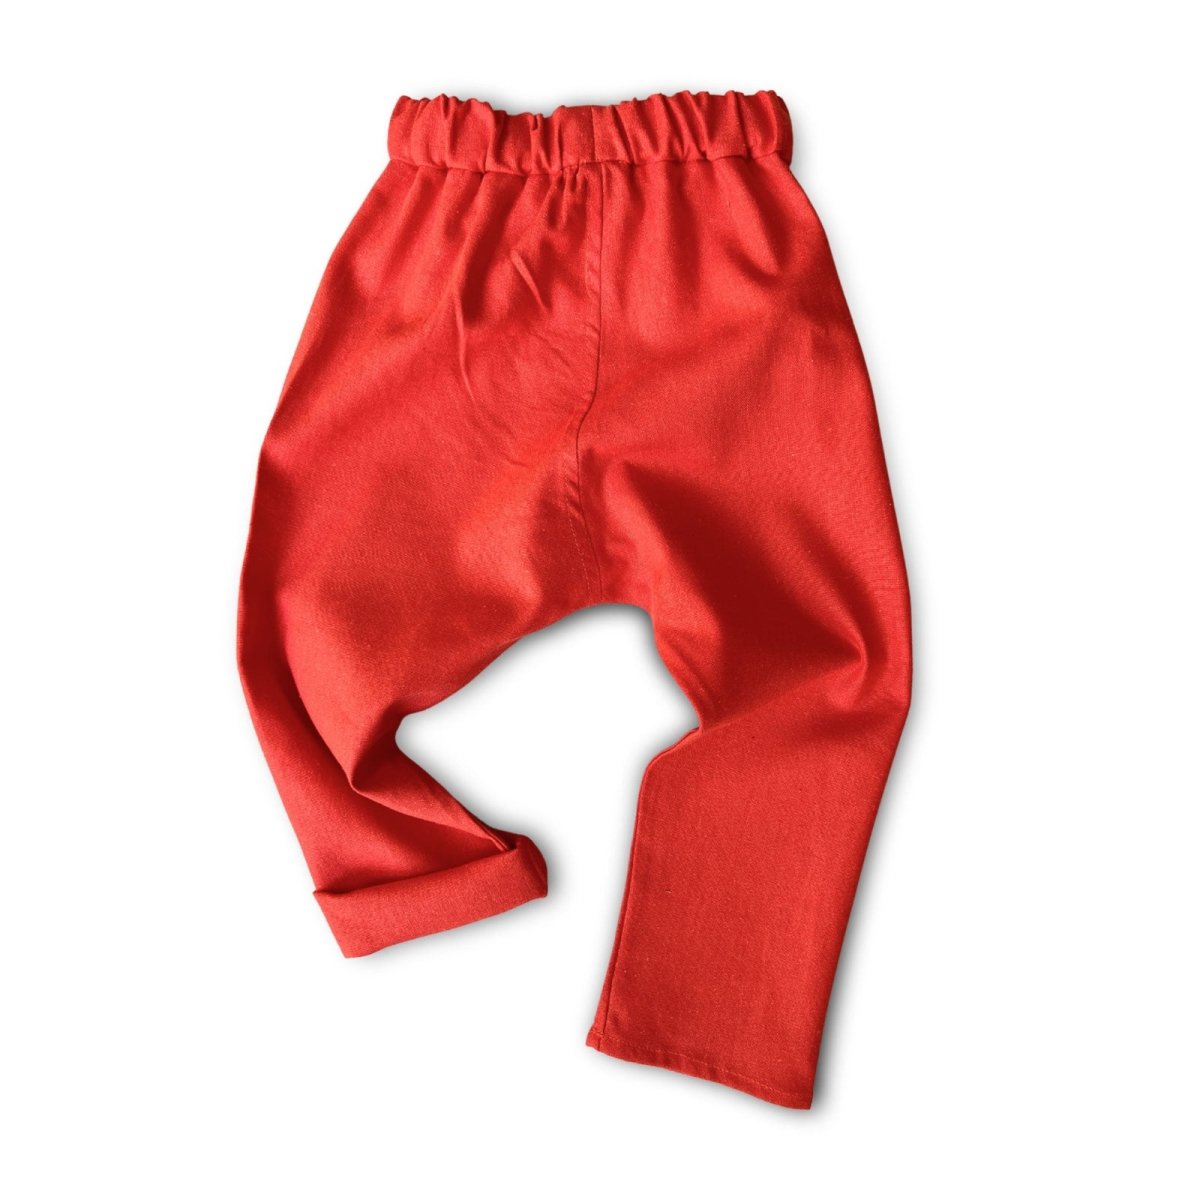 Firecracker Red Pants - Beya MadePANTS